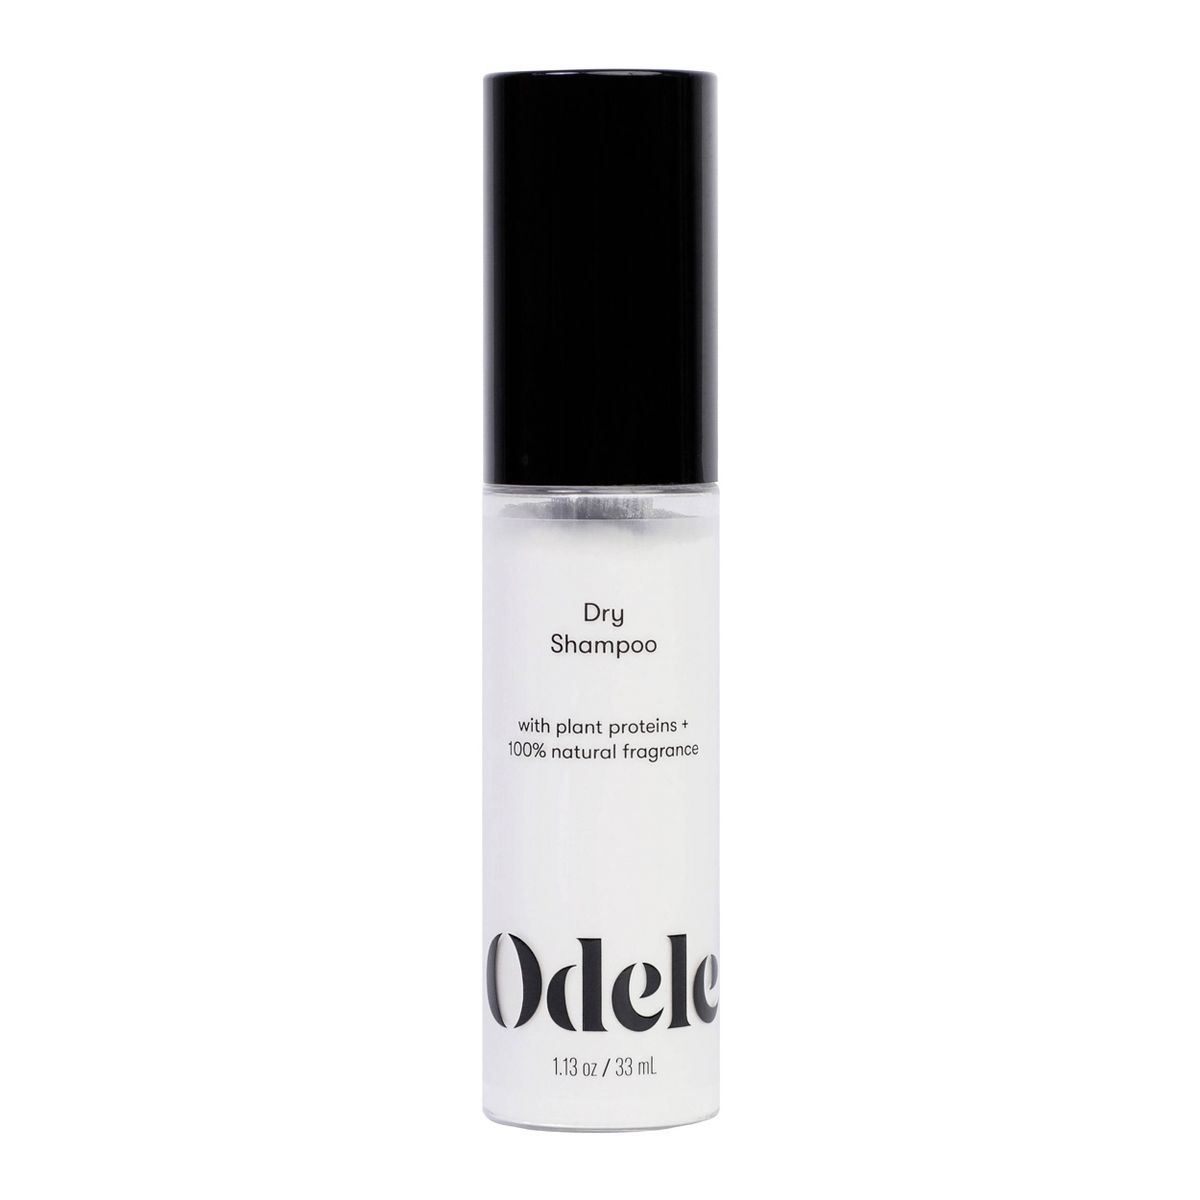 Odele Dry Shampoo Clean, Non-Aerosol and Volumizing Treatment - 1.13oz | Target